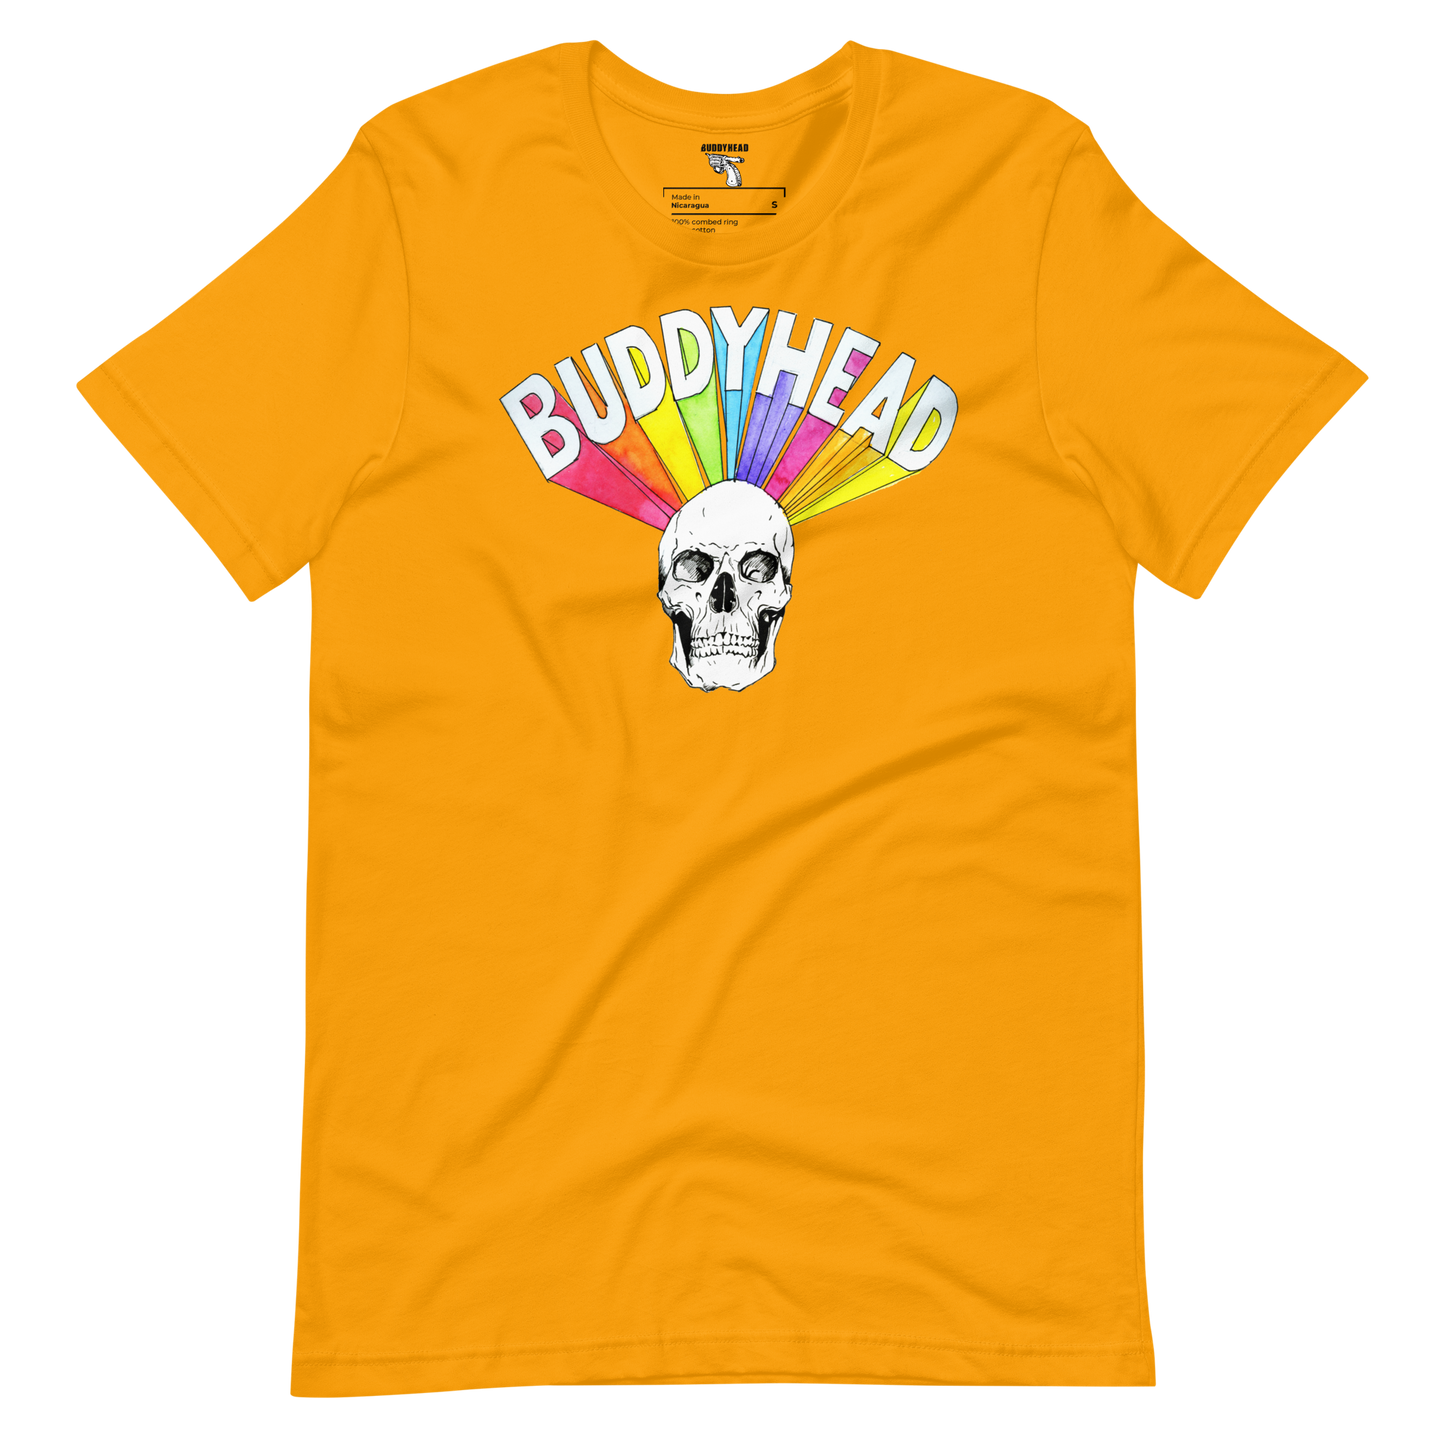 Buddyhead Rainbow Skull logo tee.